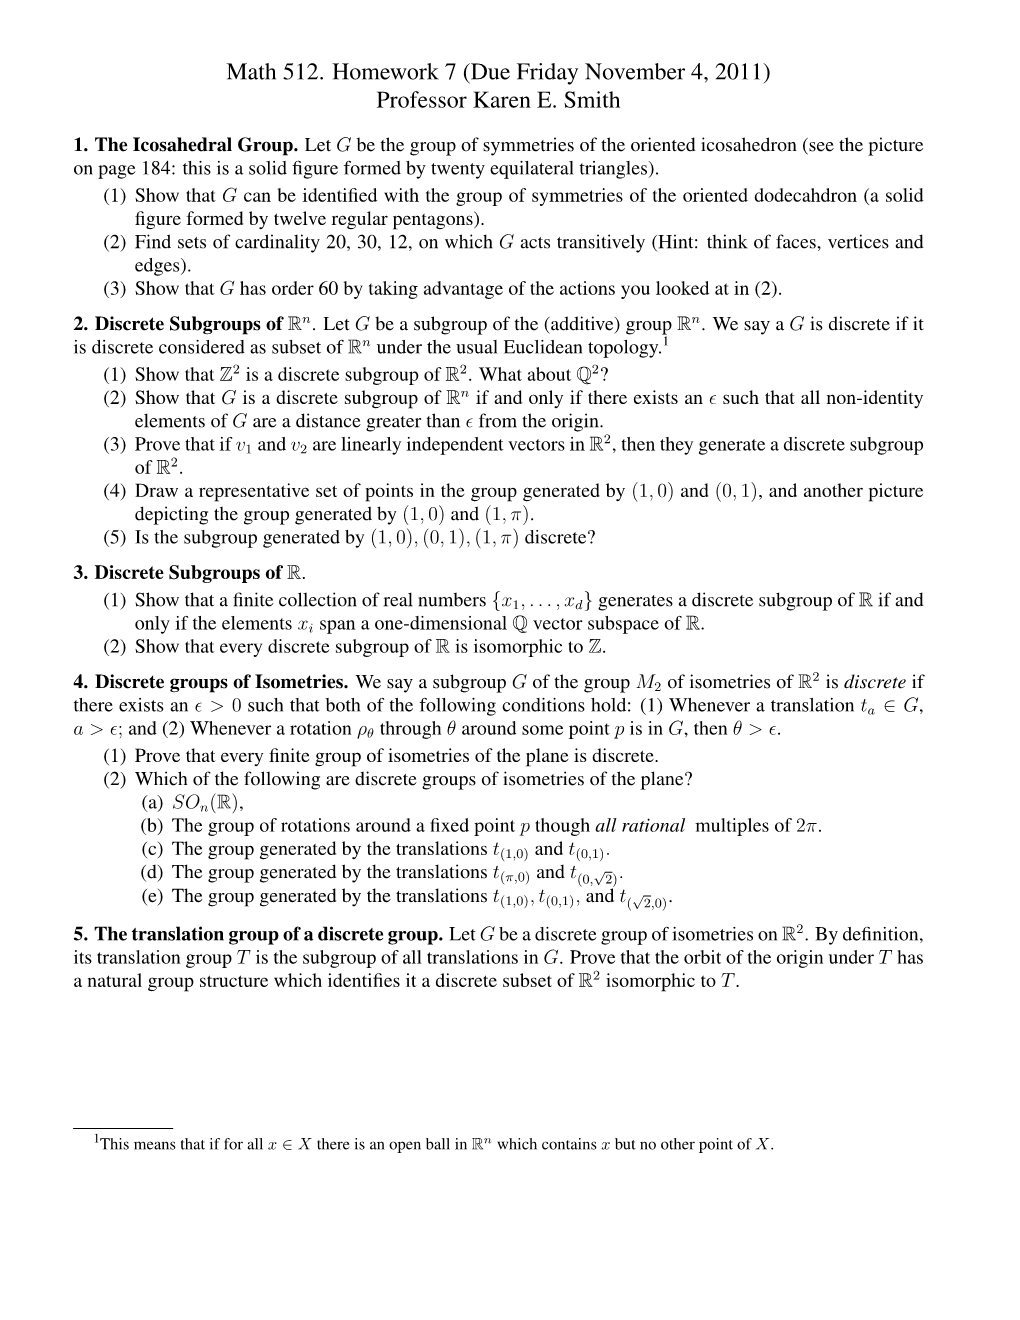 Math 512. Homework 7 (Due Friday November 4, 2011) Professor Karen E